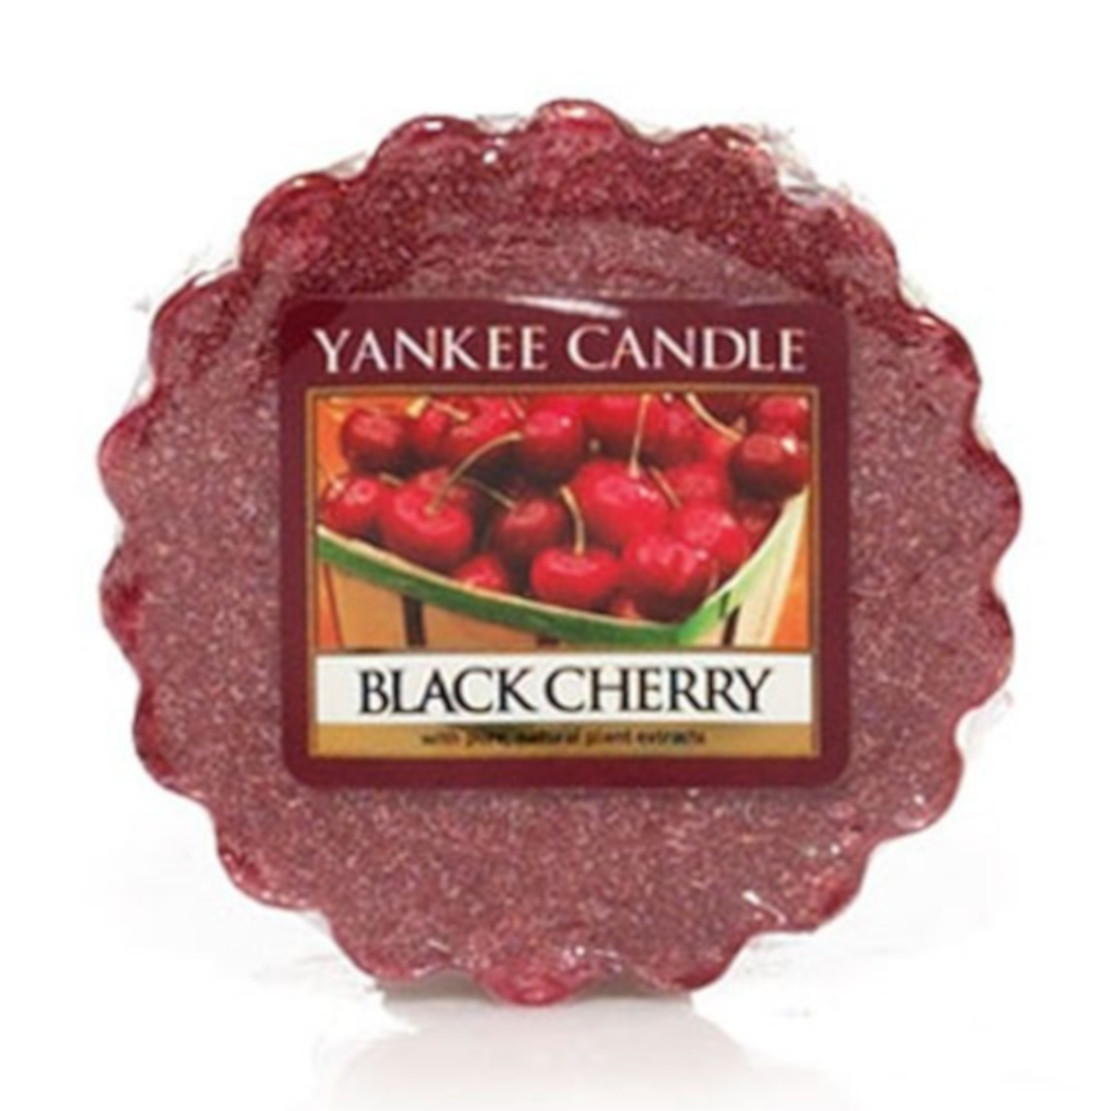 Yankee Candle Black Cherry Wax Tart